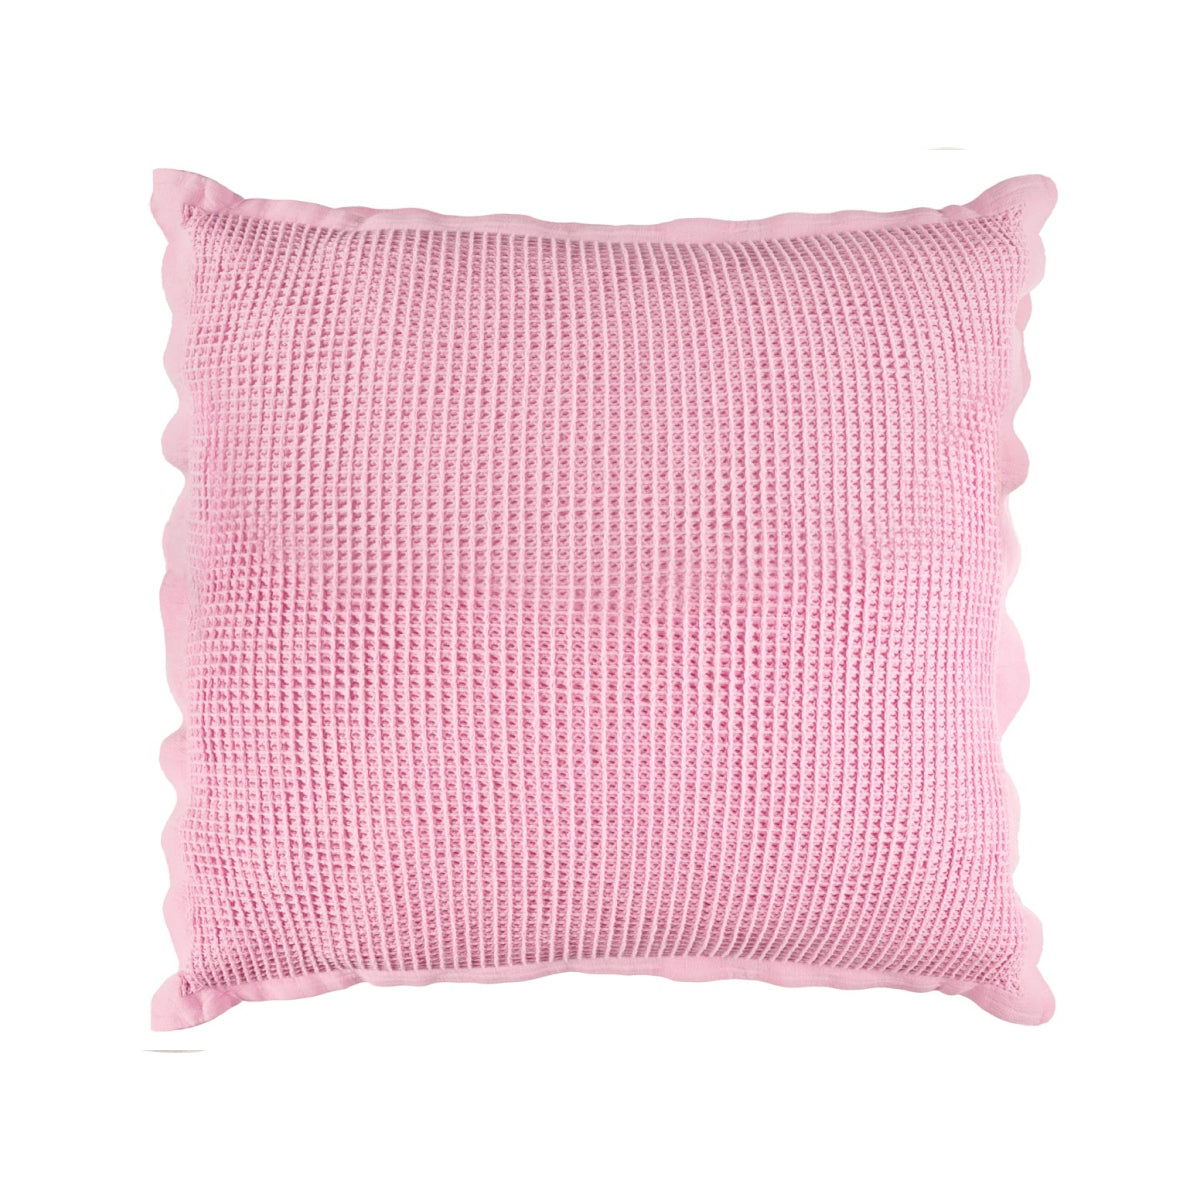 Nuppu cushion cover, pink